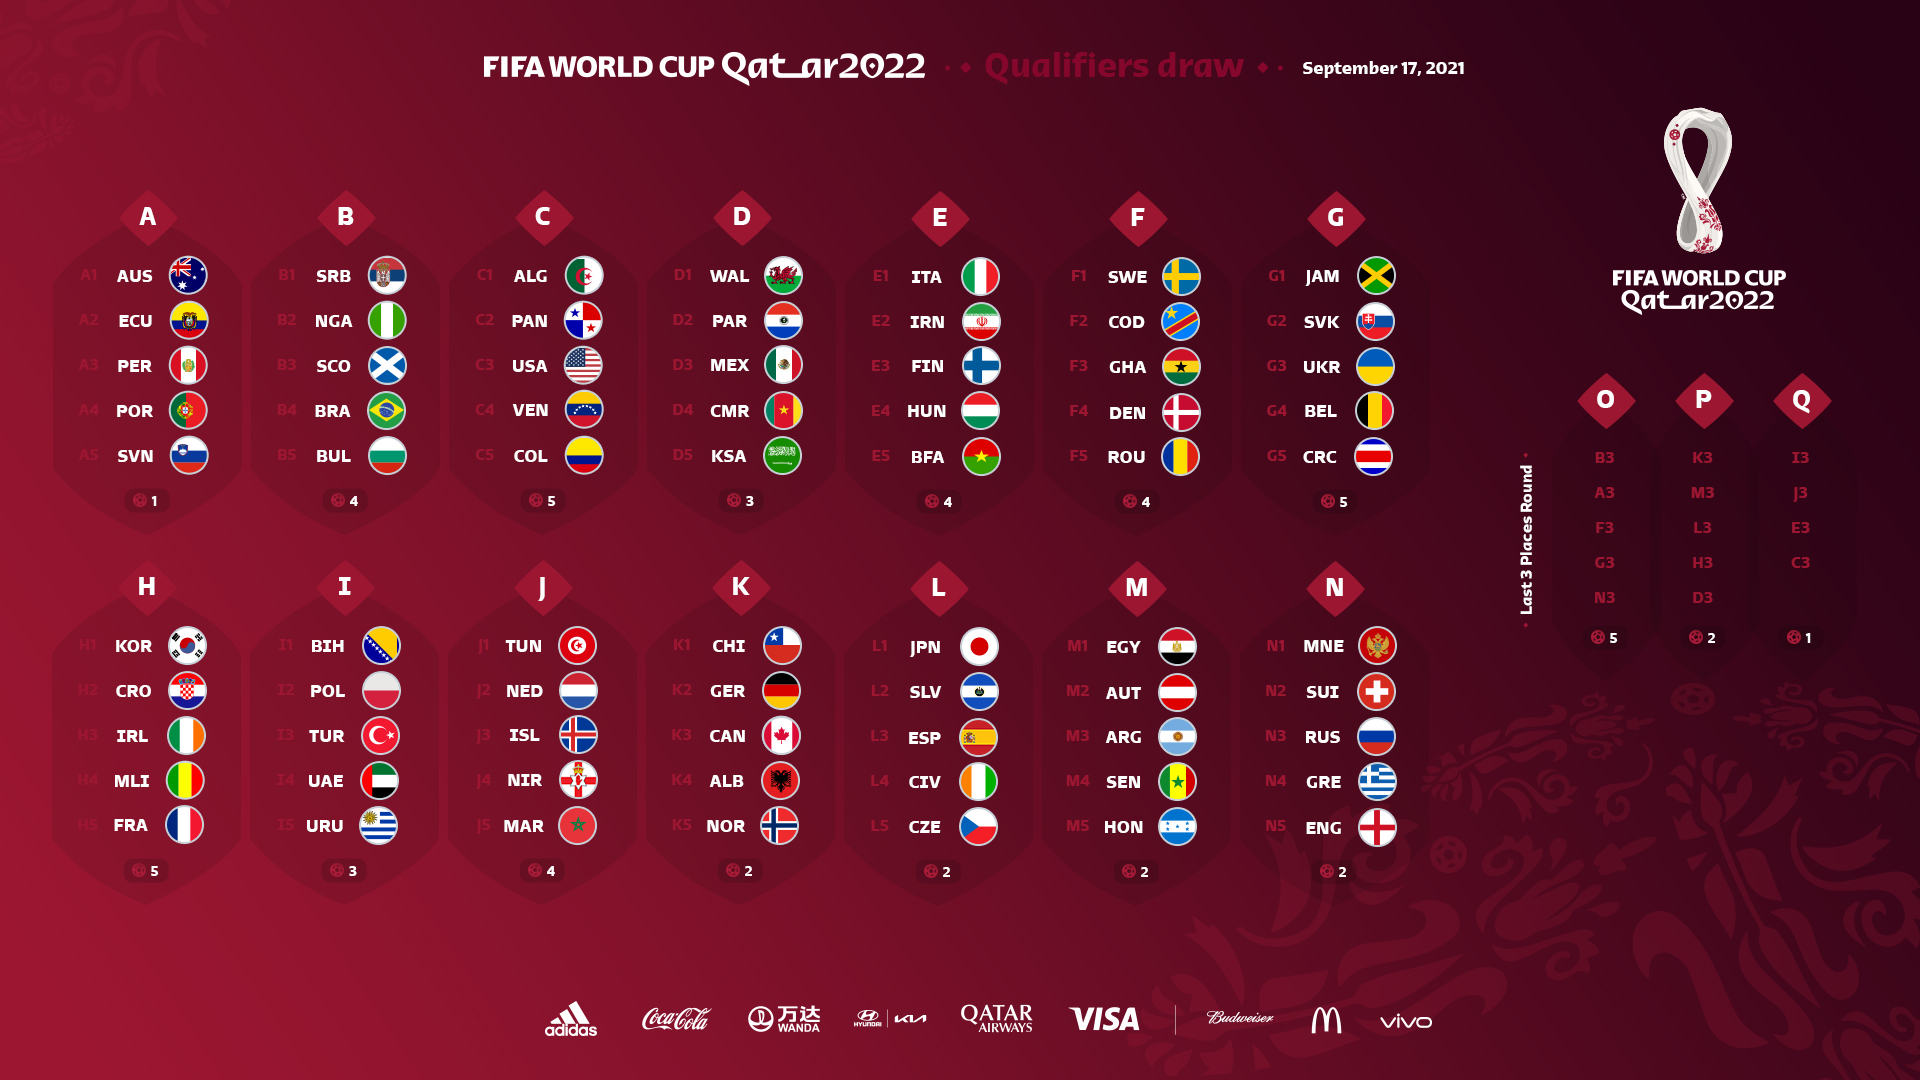 draw_qualifiers_17-09-2021.jpg